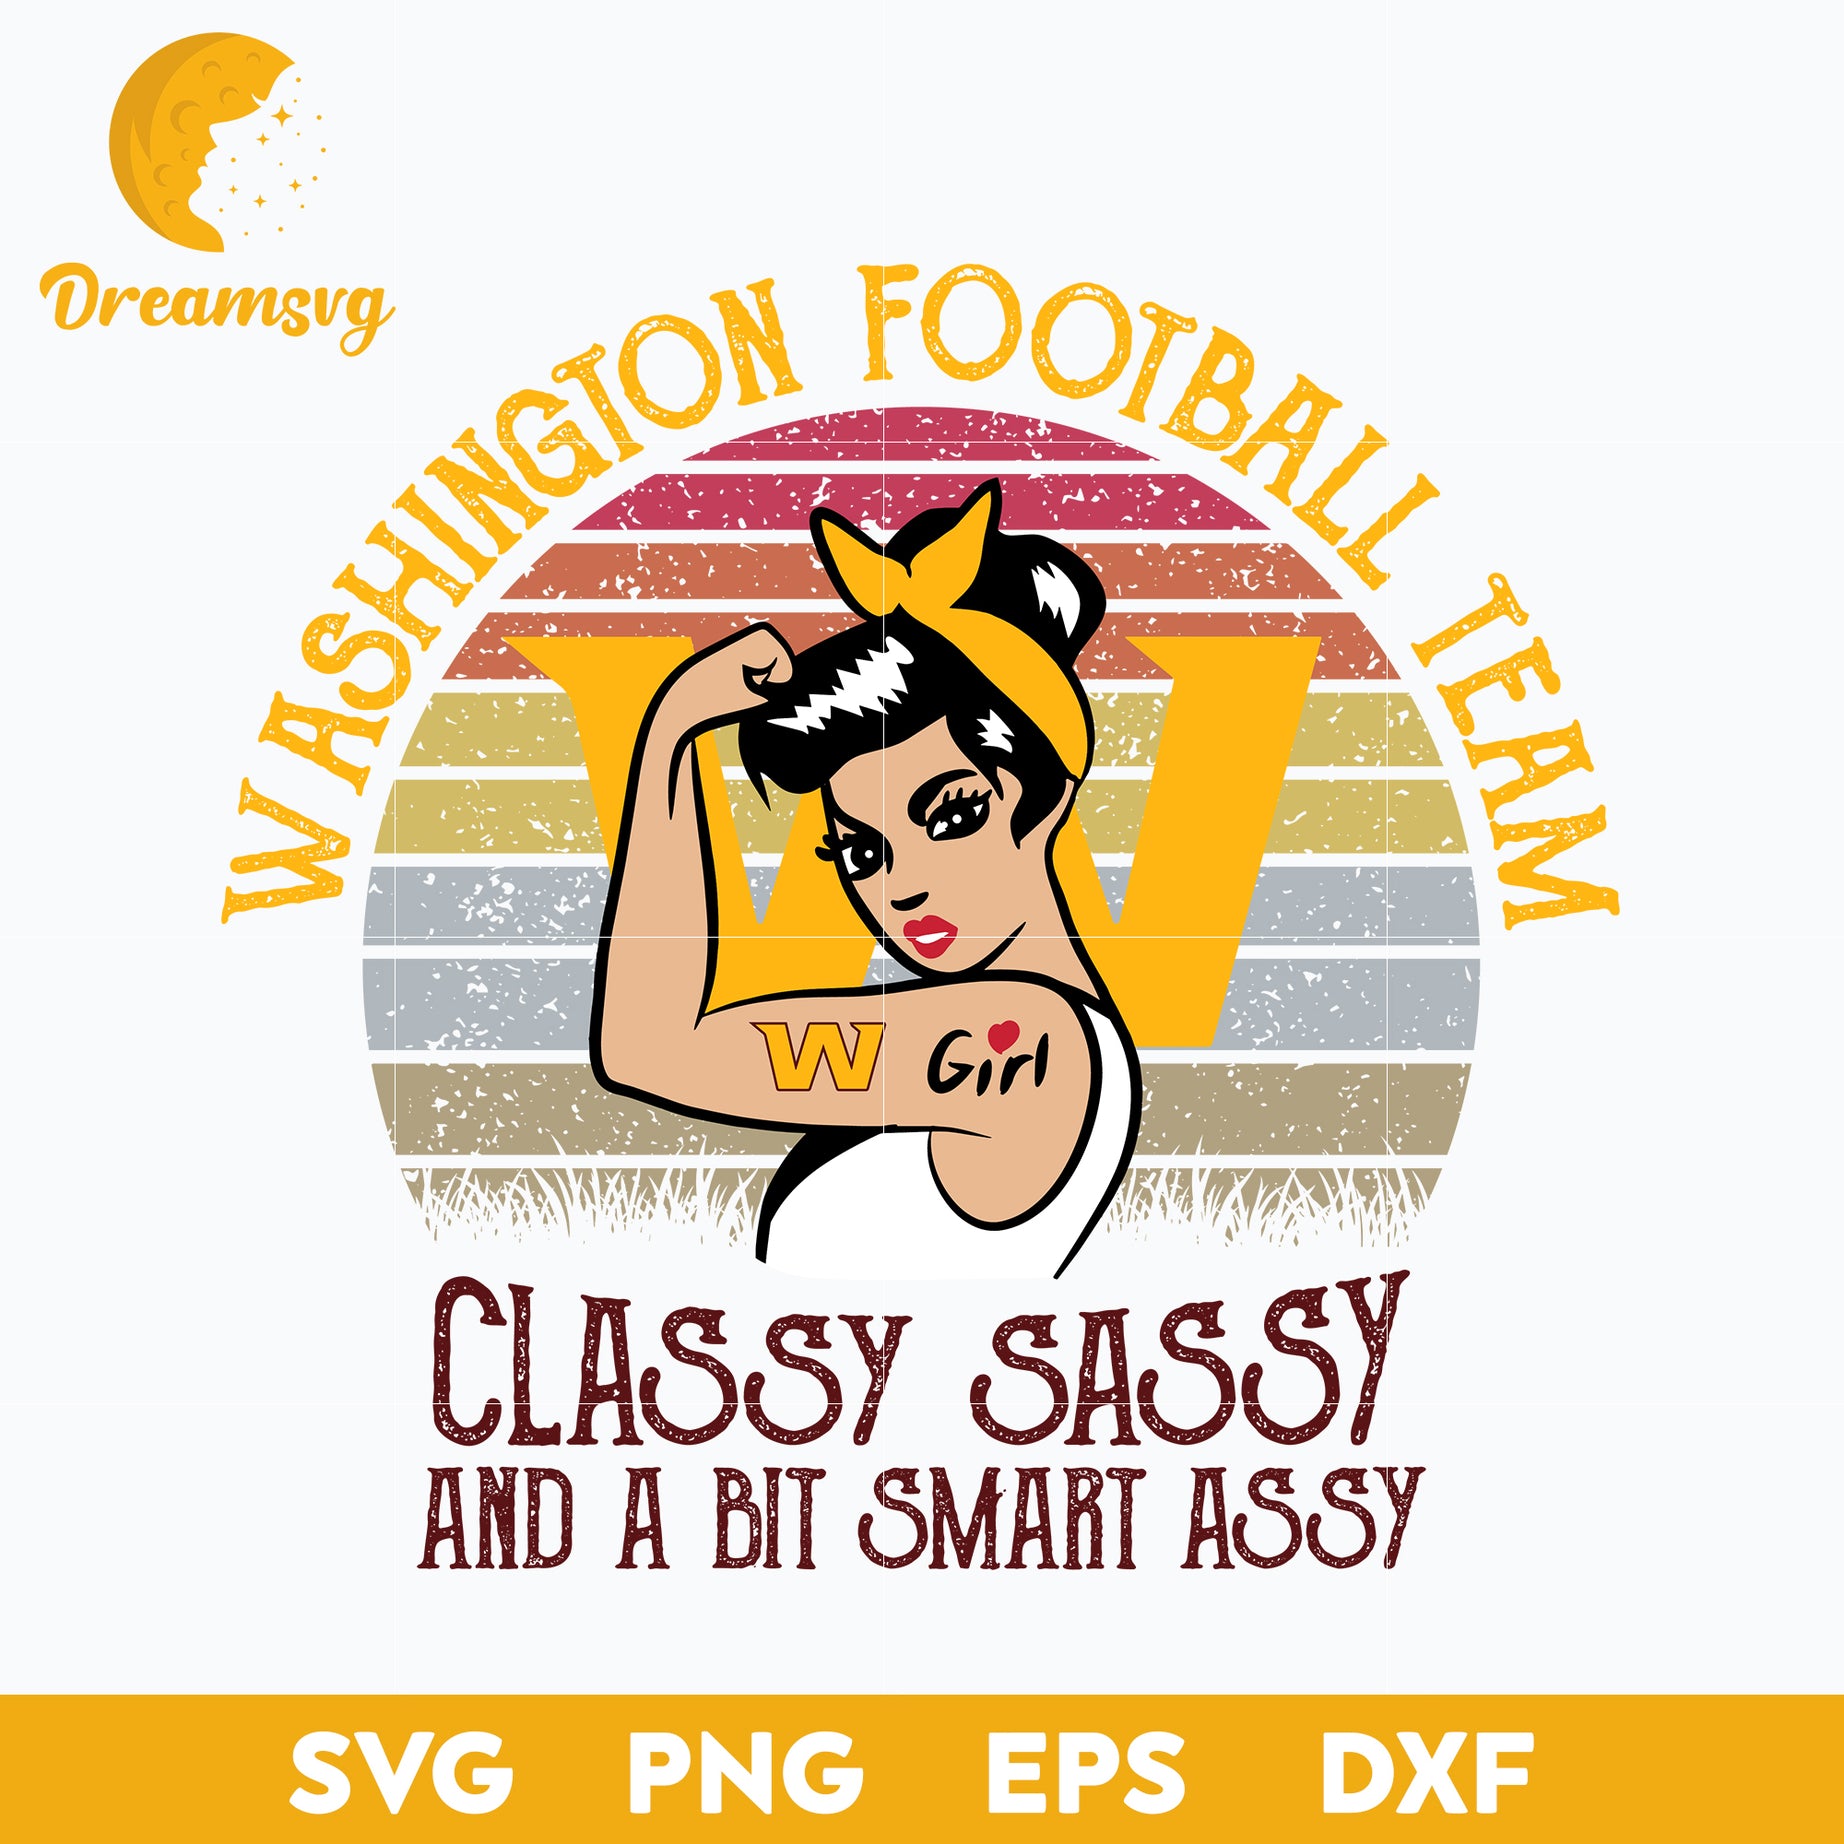 Washington Football Team Girl Classy Sassy And A Bit Smart Assy Nfl Svg, Sport Svg, Nfl Svg, Png, Dxf, Eps Digital File.